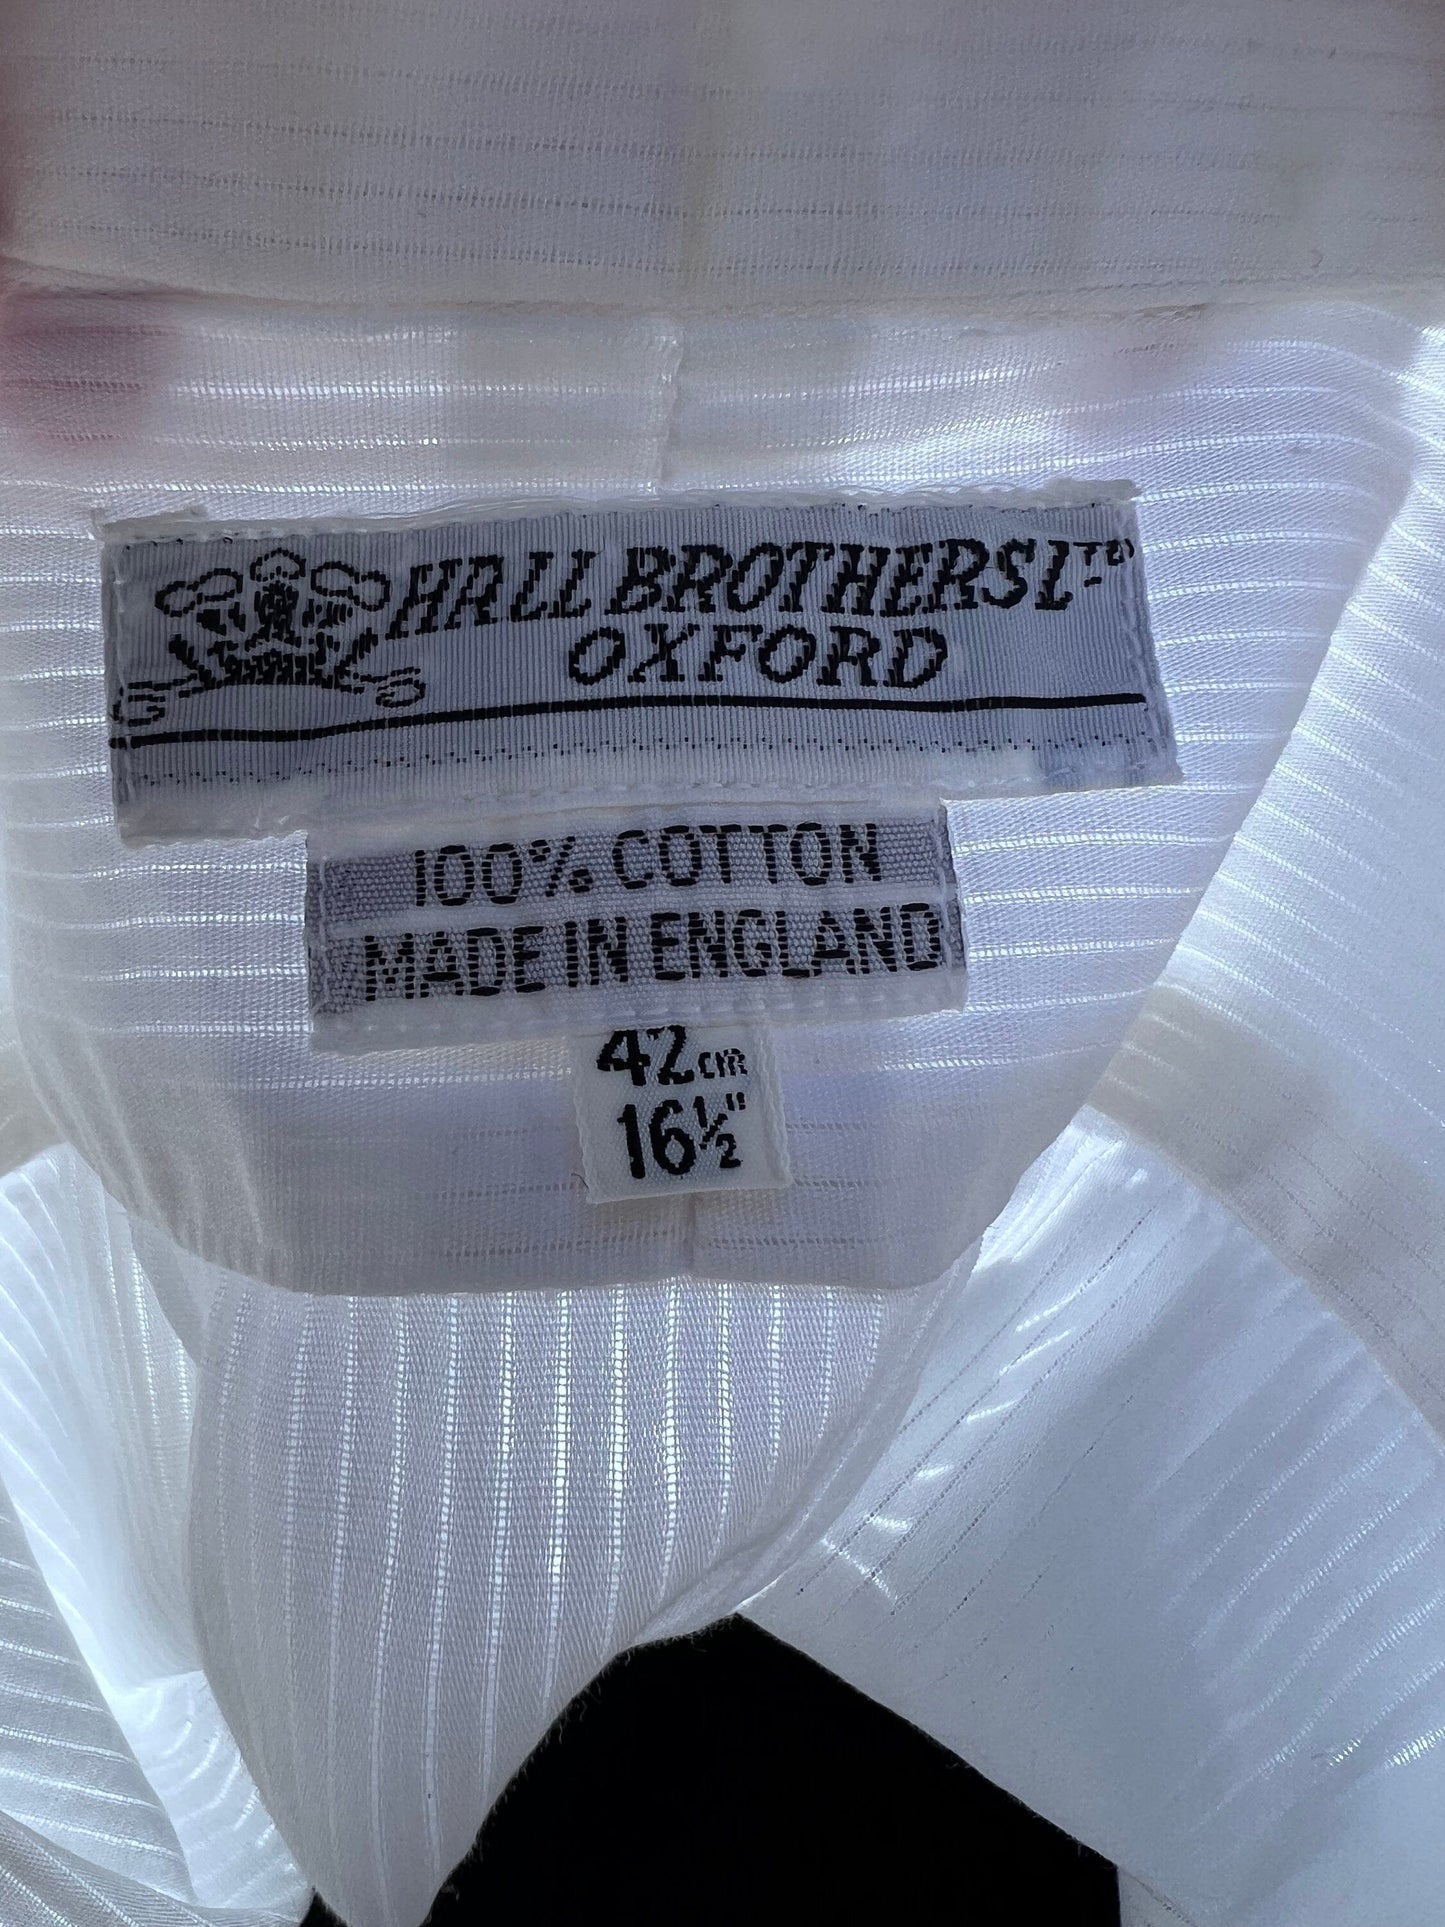 Vintage 1960s Dress Shirt Hall Brothers, Oxford White Ruffle , Tuxedo Shirt , vintage dress shirt, vintage shirt, men’s shirt 16.5” 42”